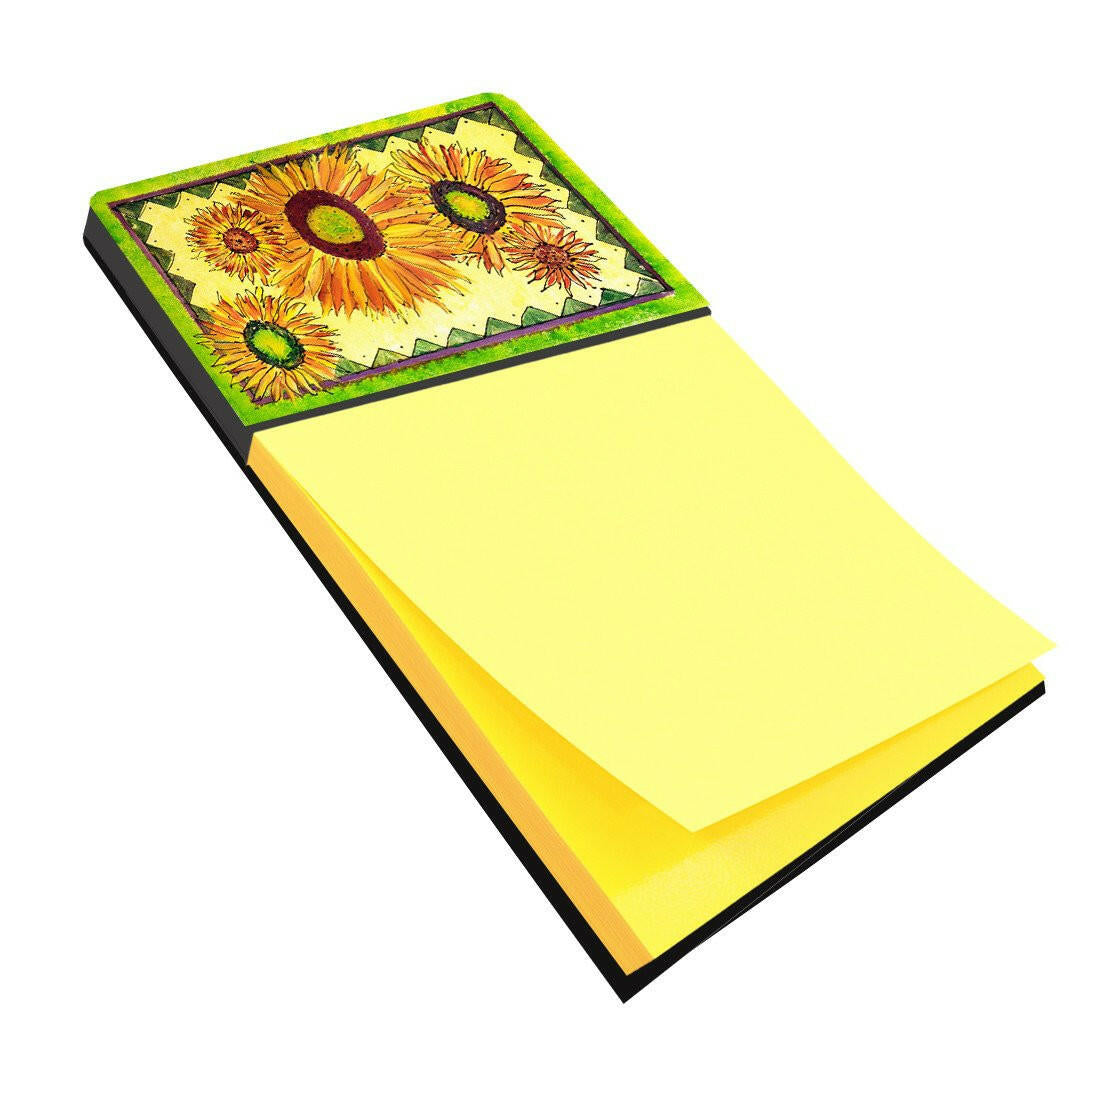 Flower - Sunflower Refiillable Sticky Note Holder or Postit Note Dispenser 8060SN by Caroline's Treasures